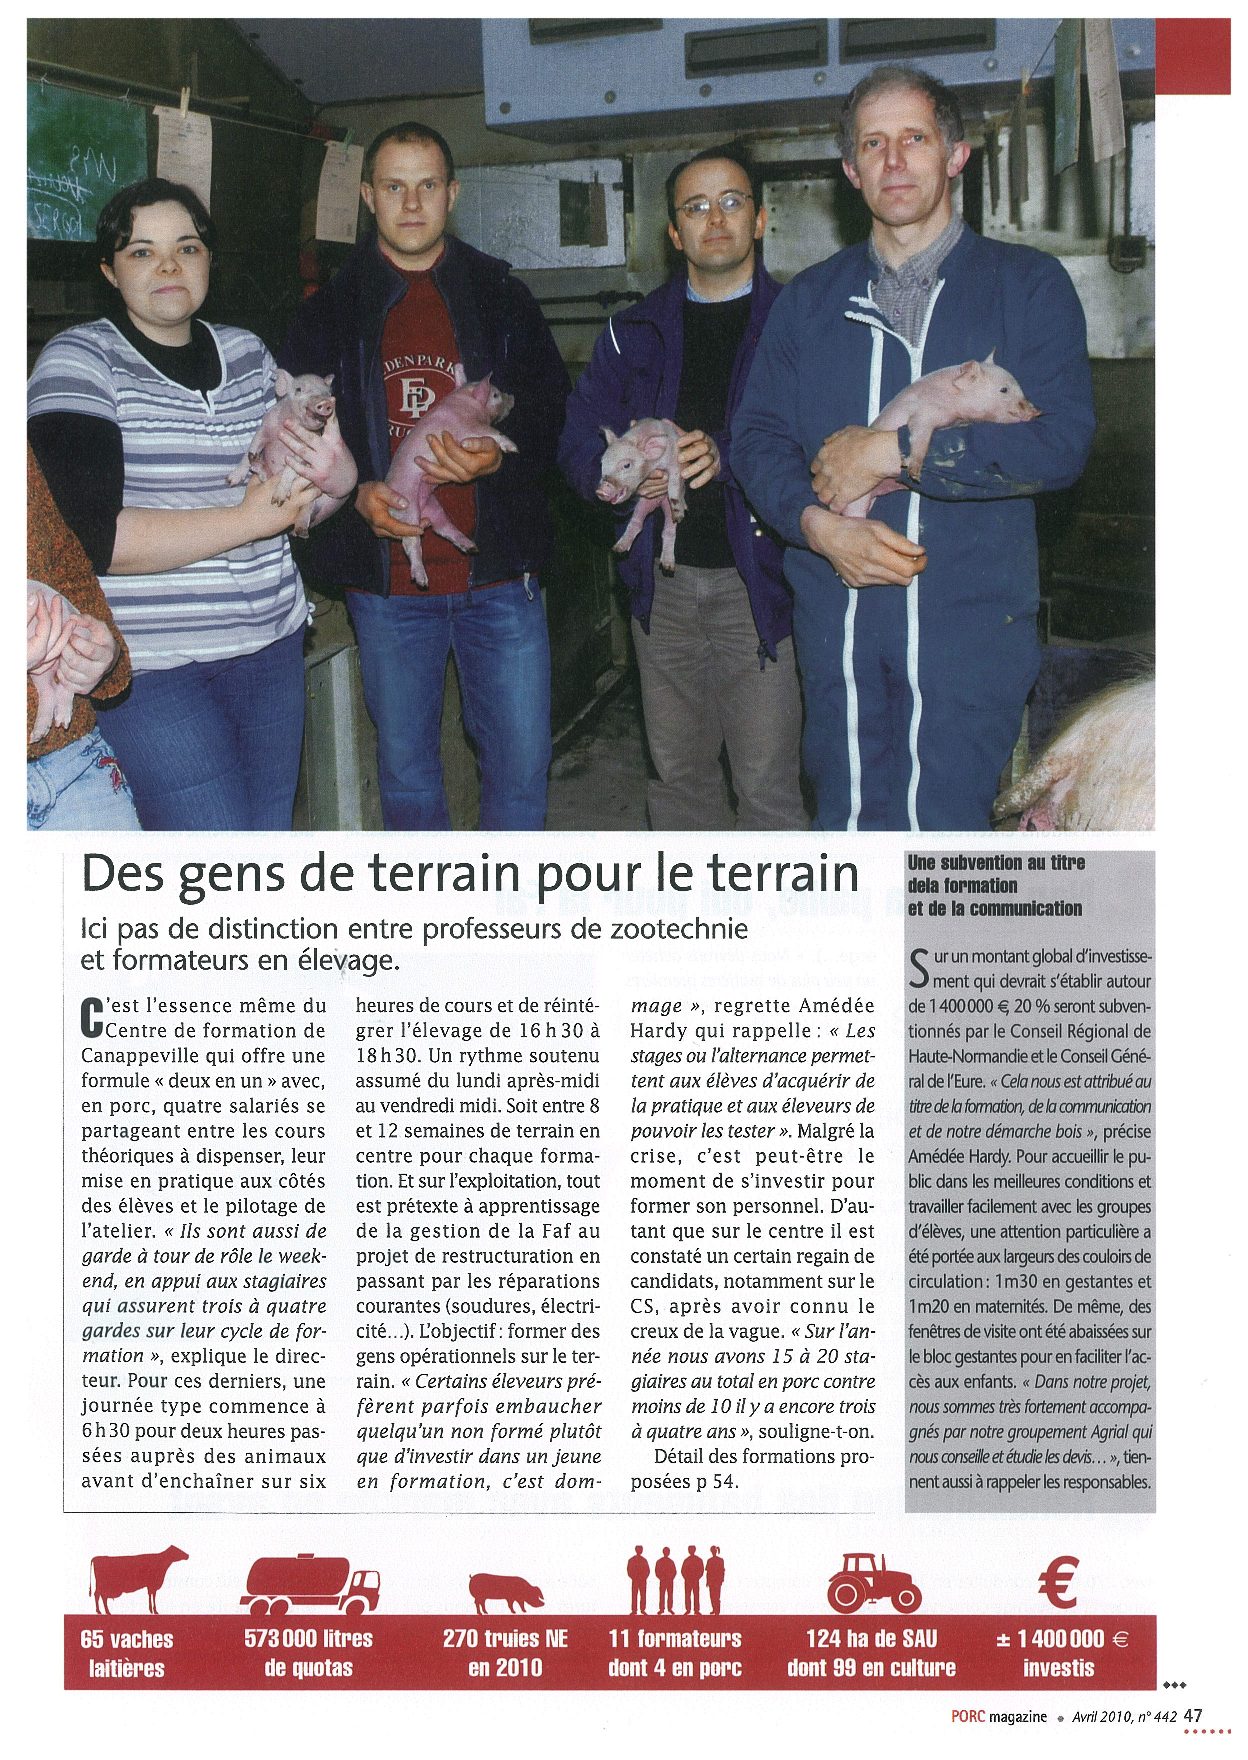 Porc Magazine (avril 2010) (Page 2)